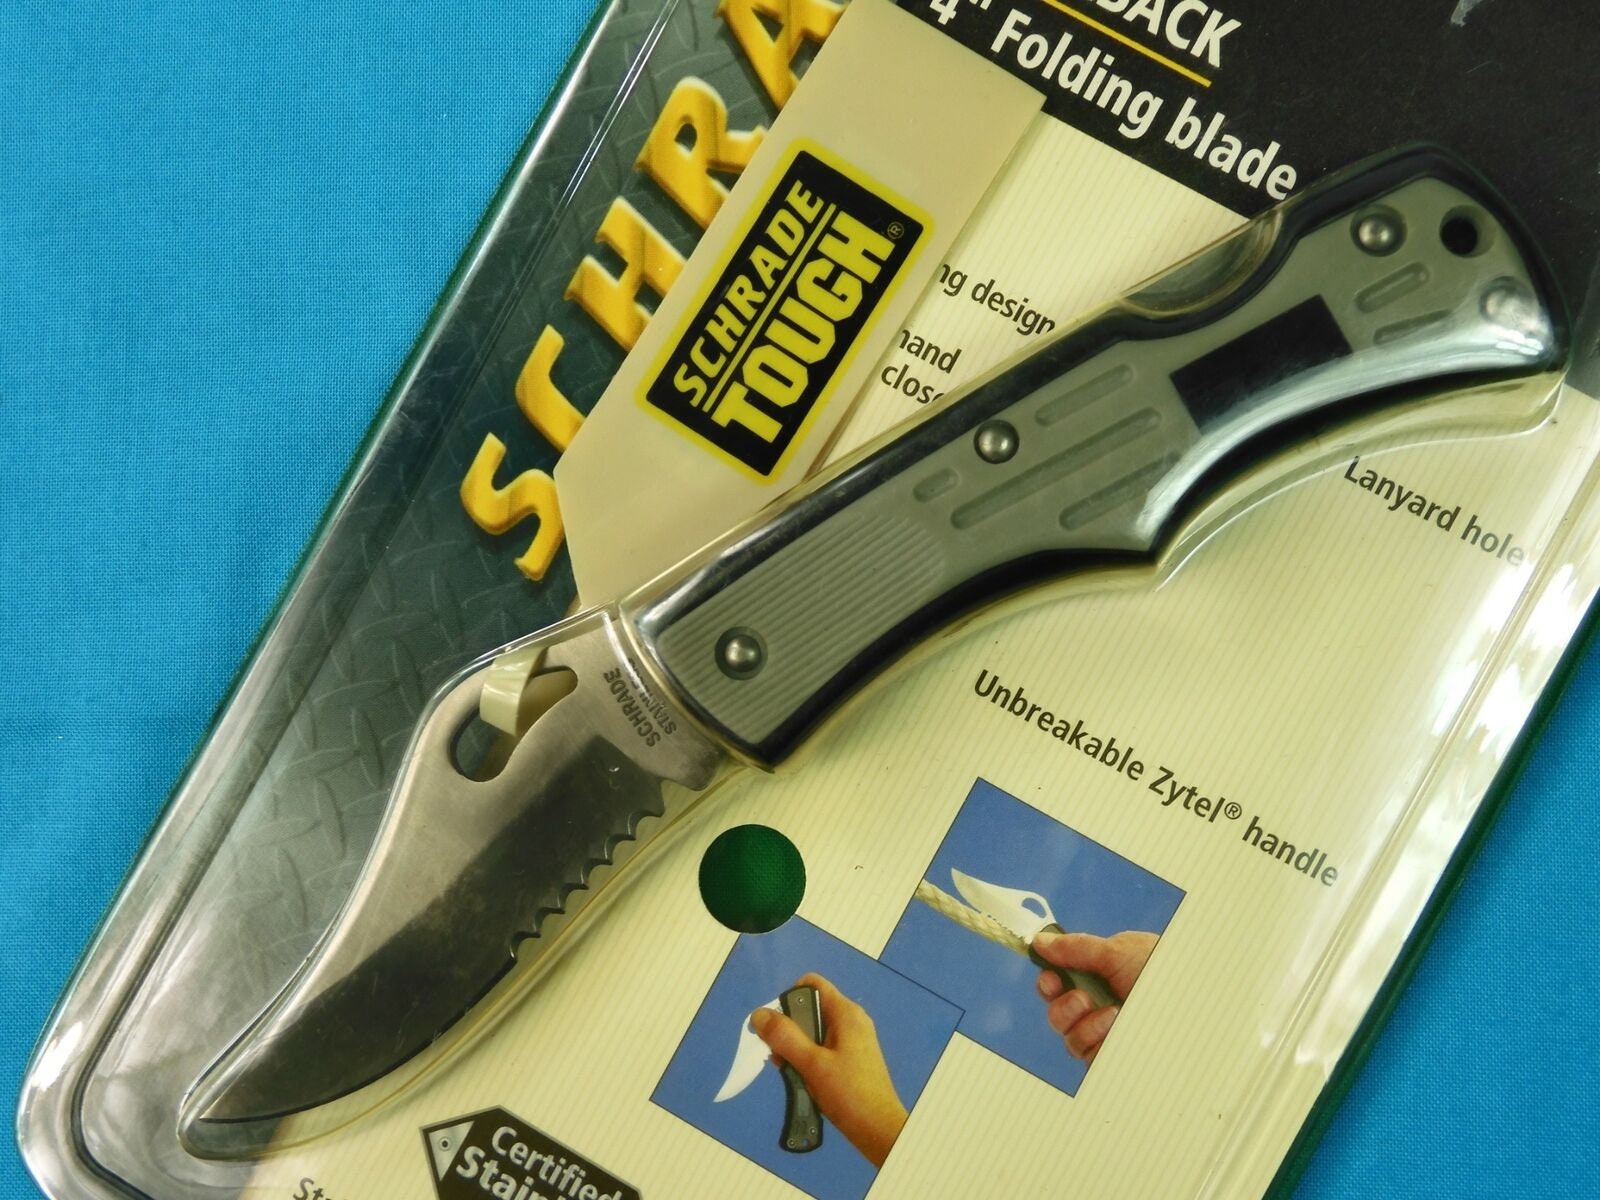 Schrade LandShark 3 inch Folding Knife